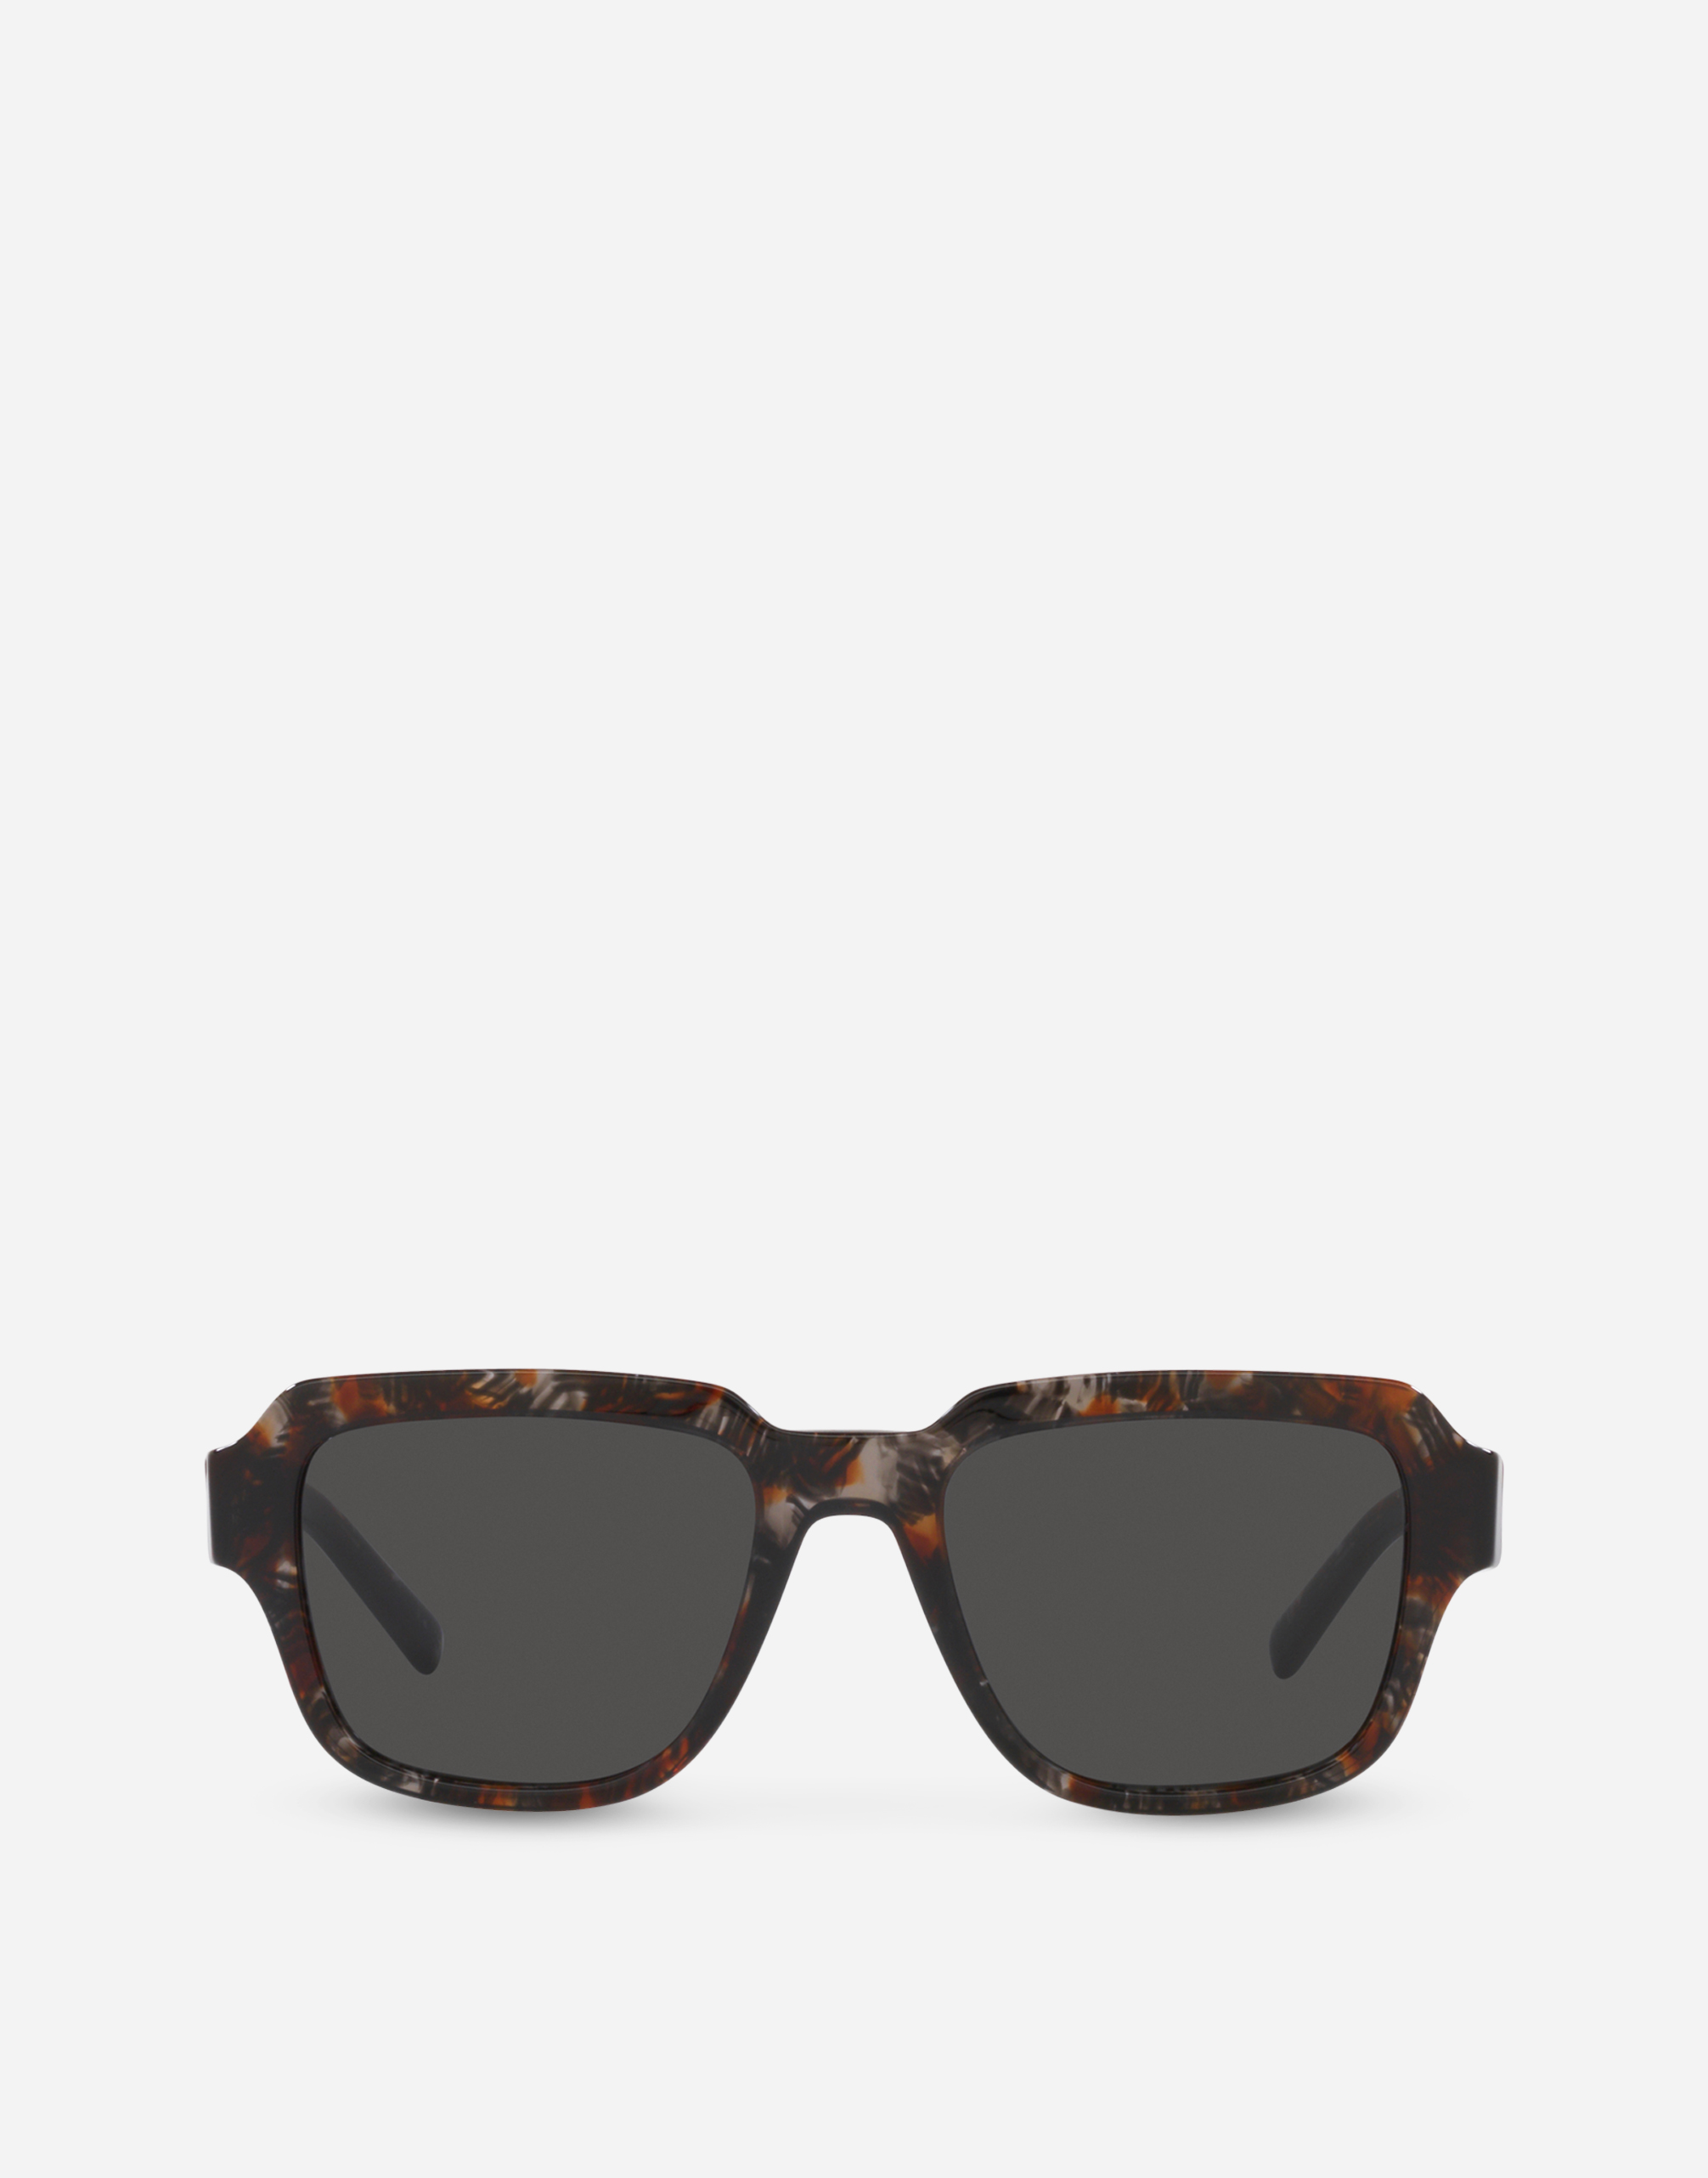 DG crossed sunglasses in Grey havana